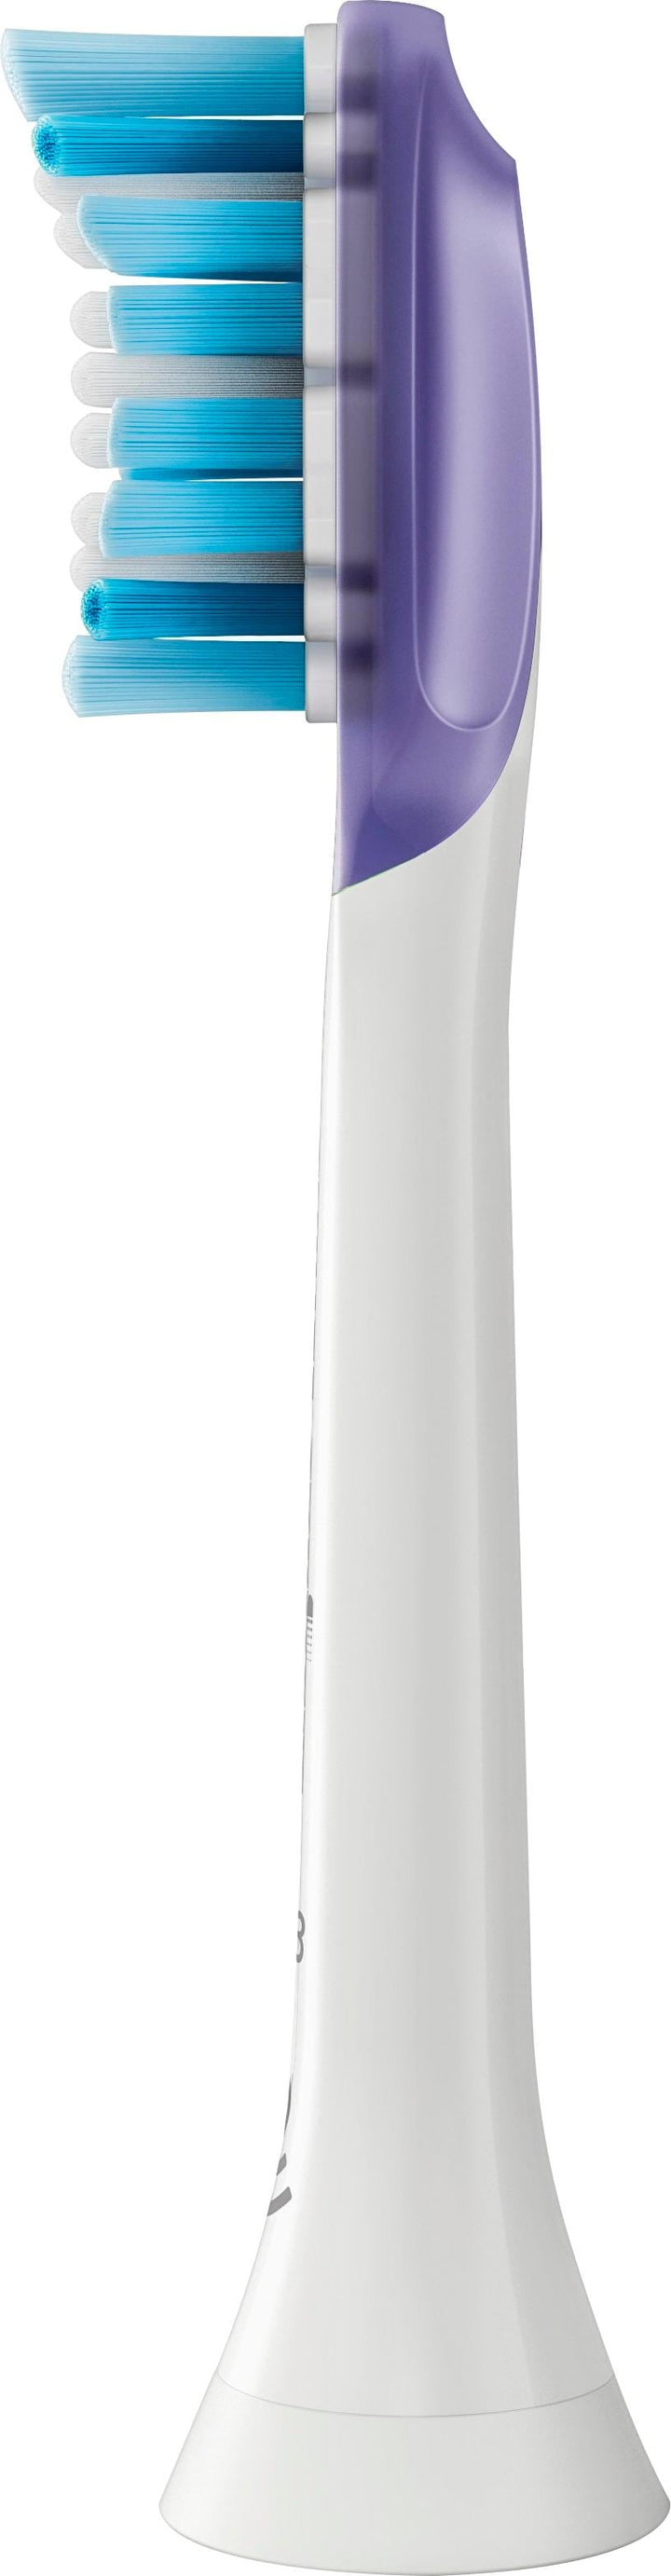 Philips Sonicare - Premium Gum Care Brush Heads (4-Pack) - White_6